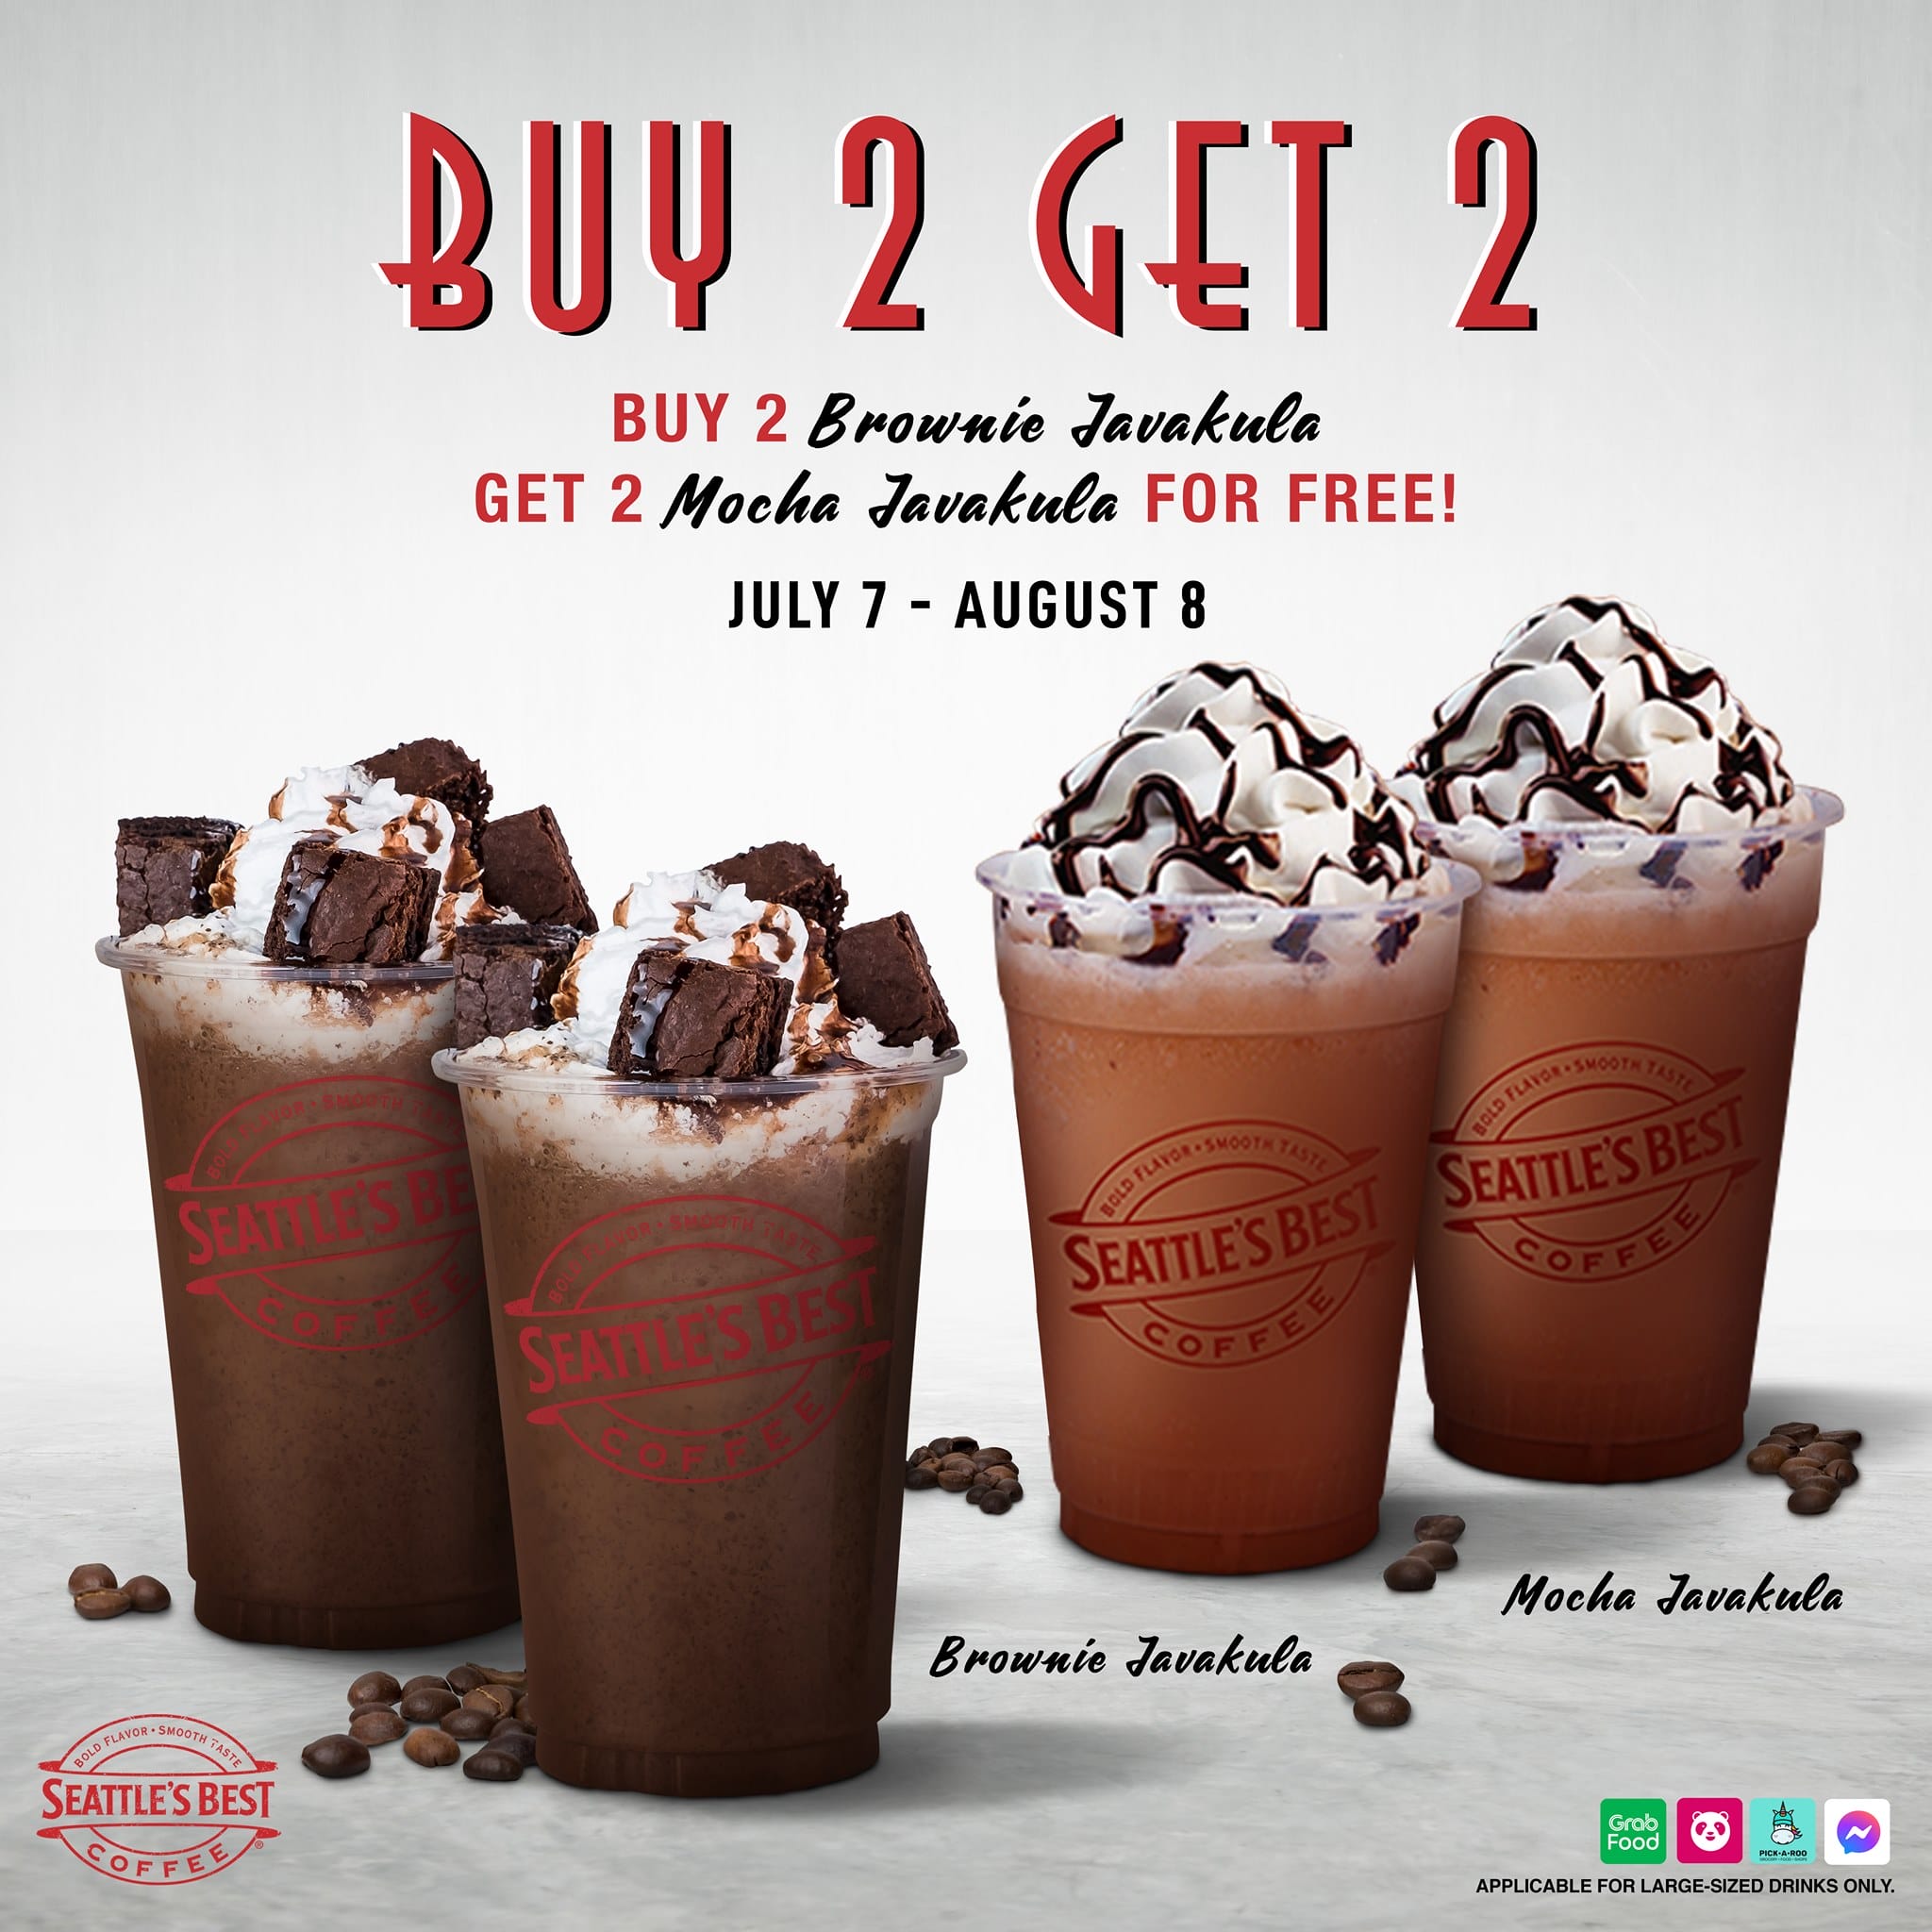 Seattles Best Coffee Buy 2 Get 2 Promo Deals Pinoy